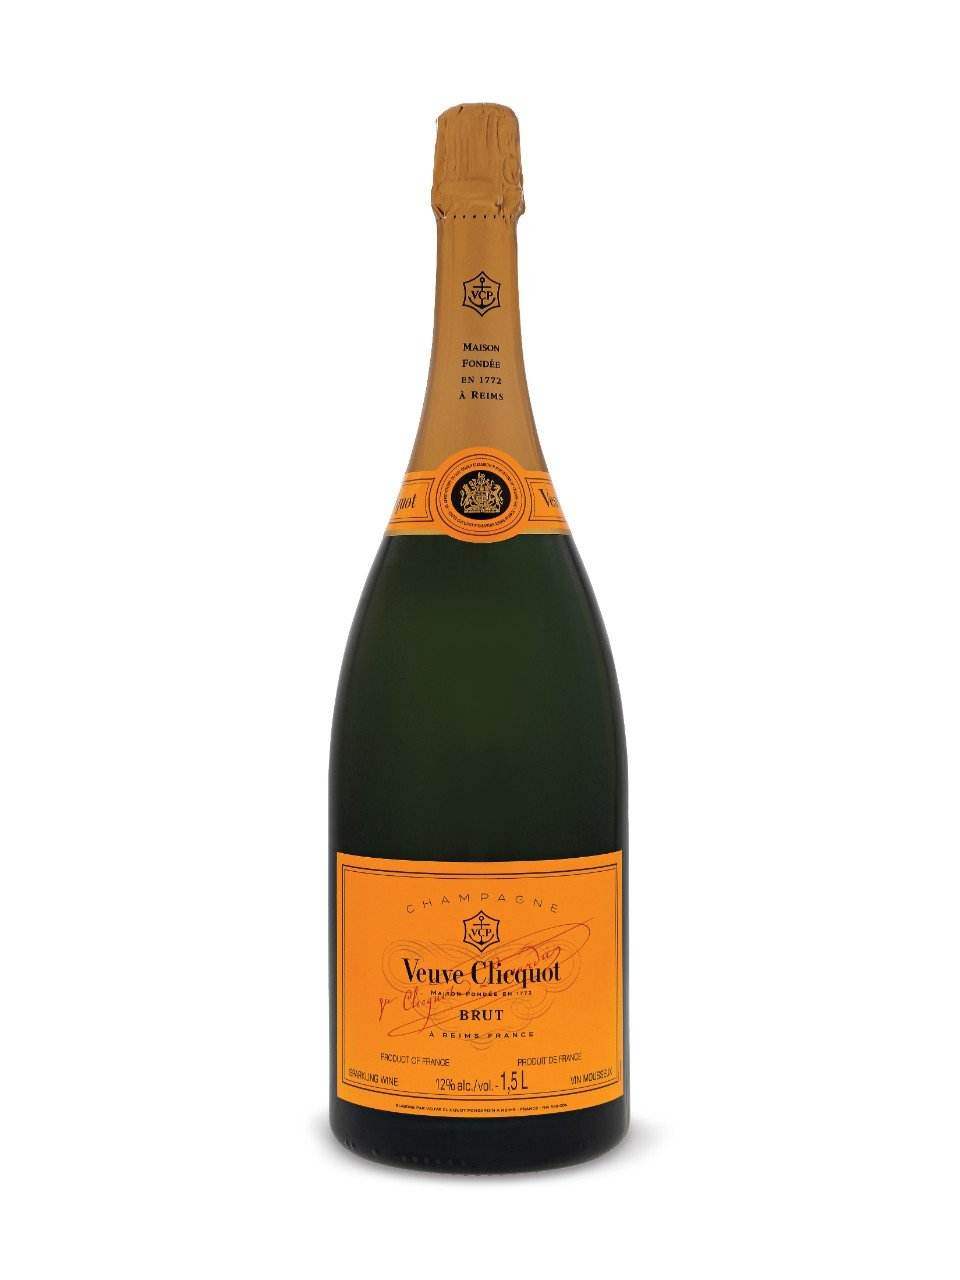 Veuve Clicquot Brut Champagne 1.5L - Vyno.ca